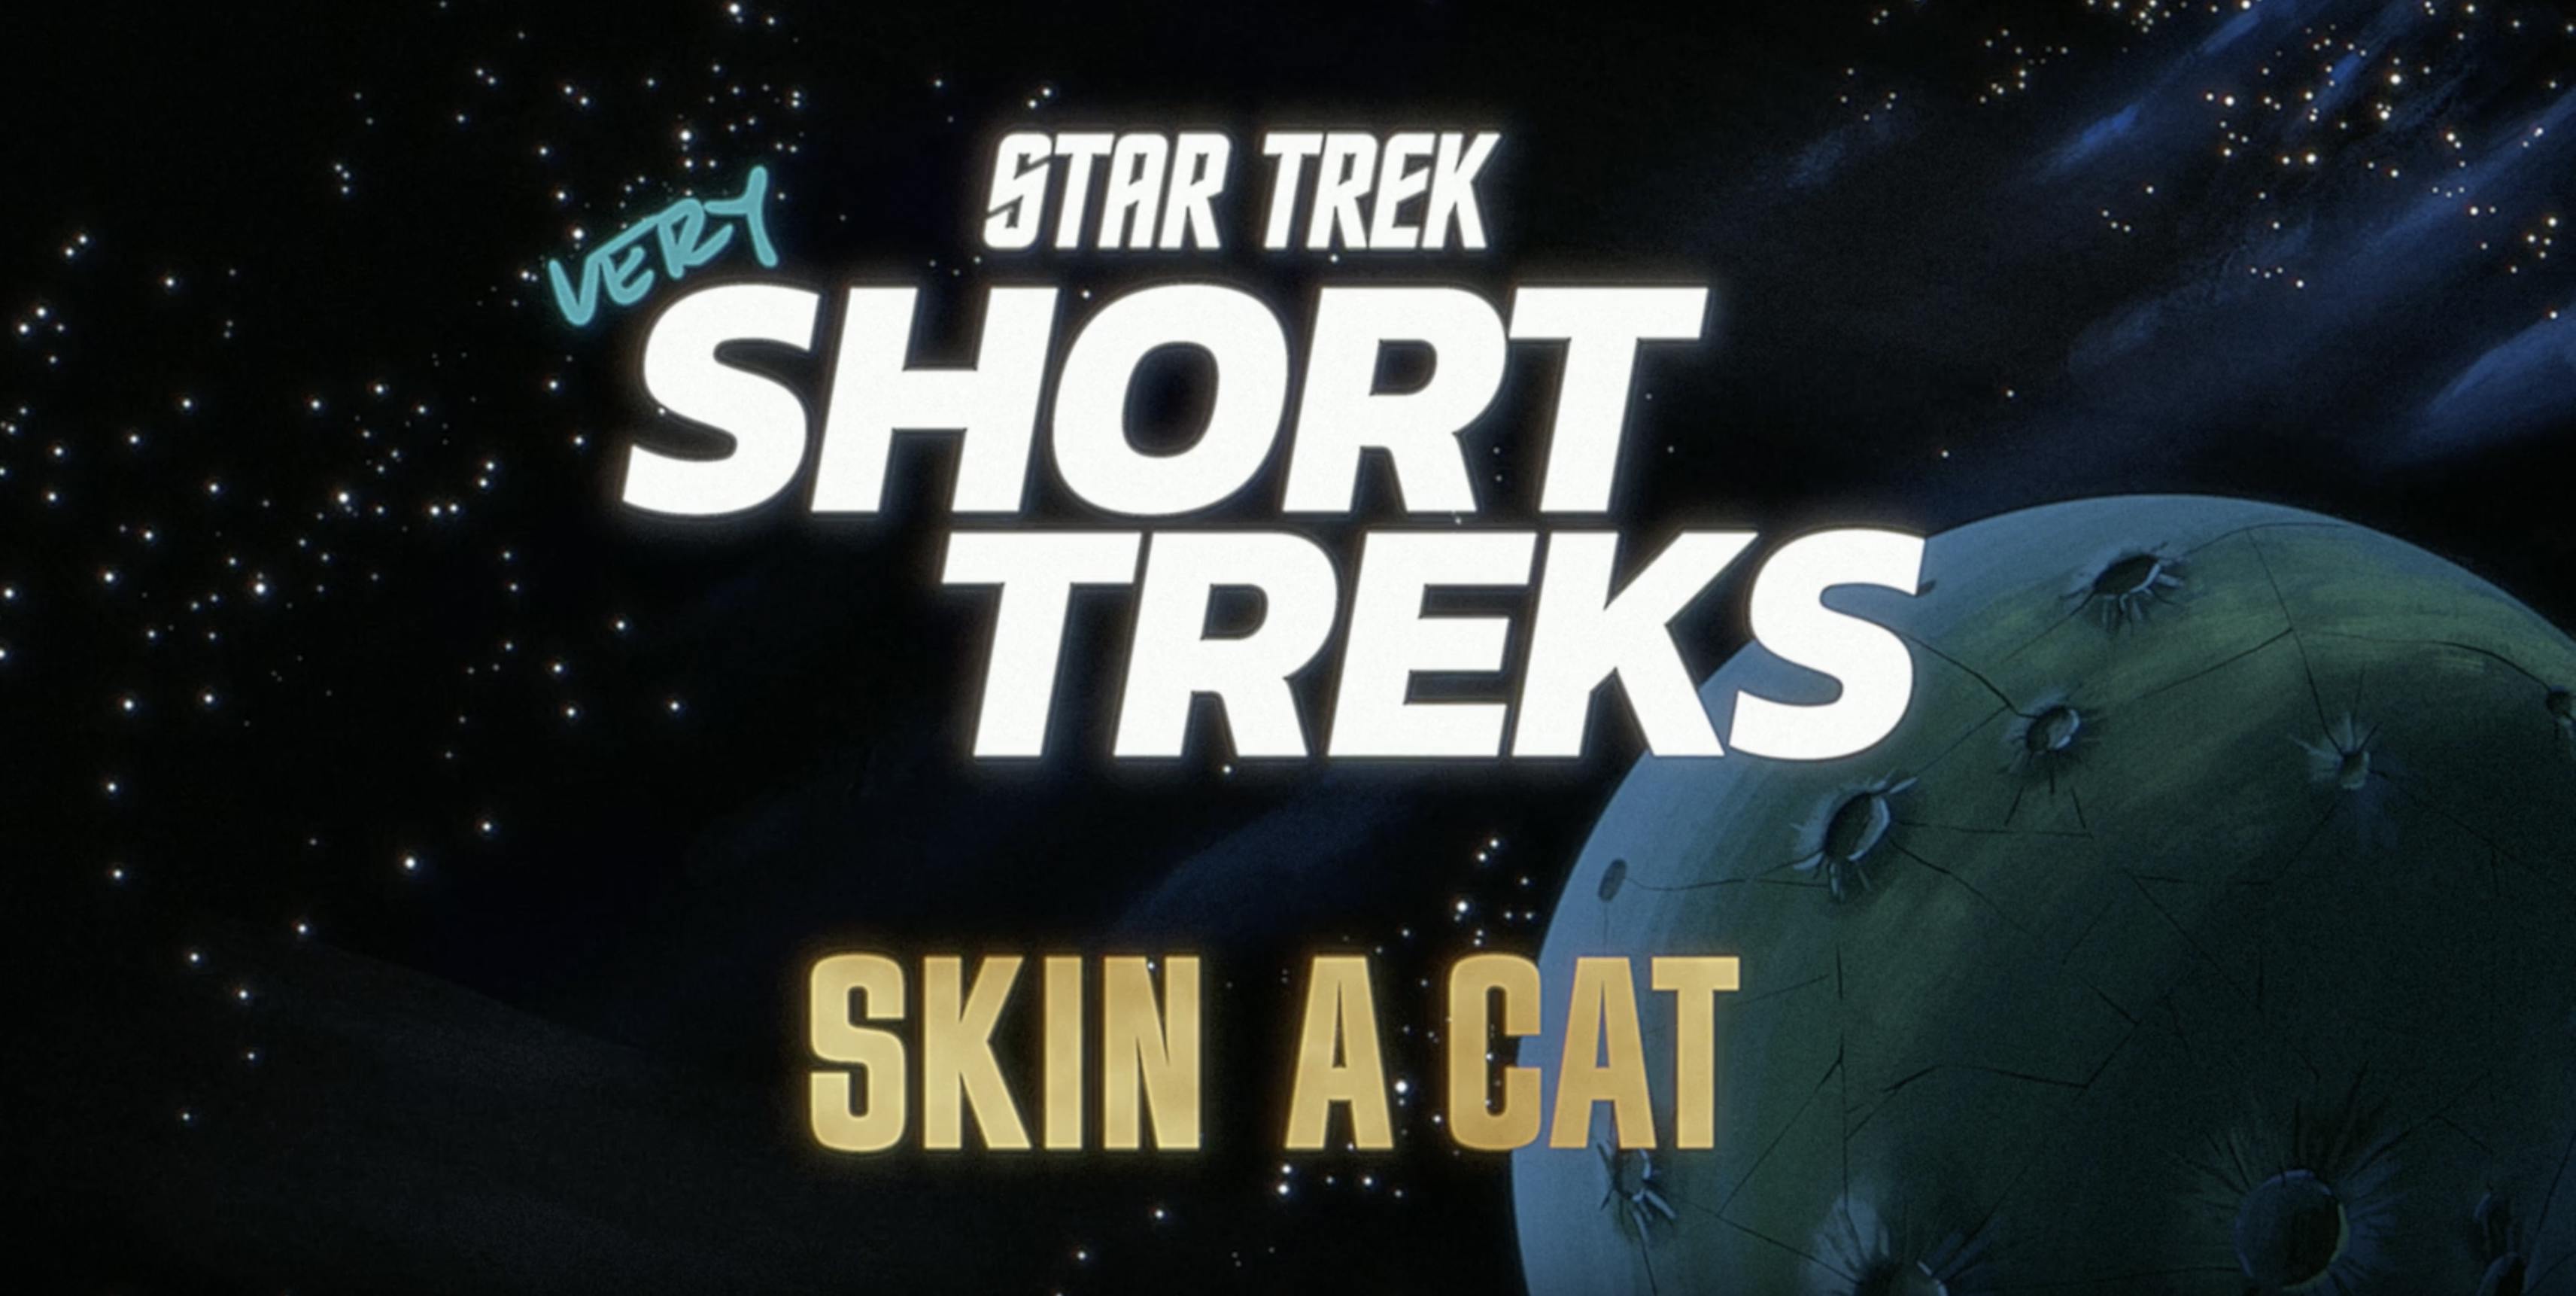 Star Trek: very Short Treks title treatment with 'Skin A Cat'